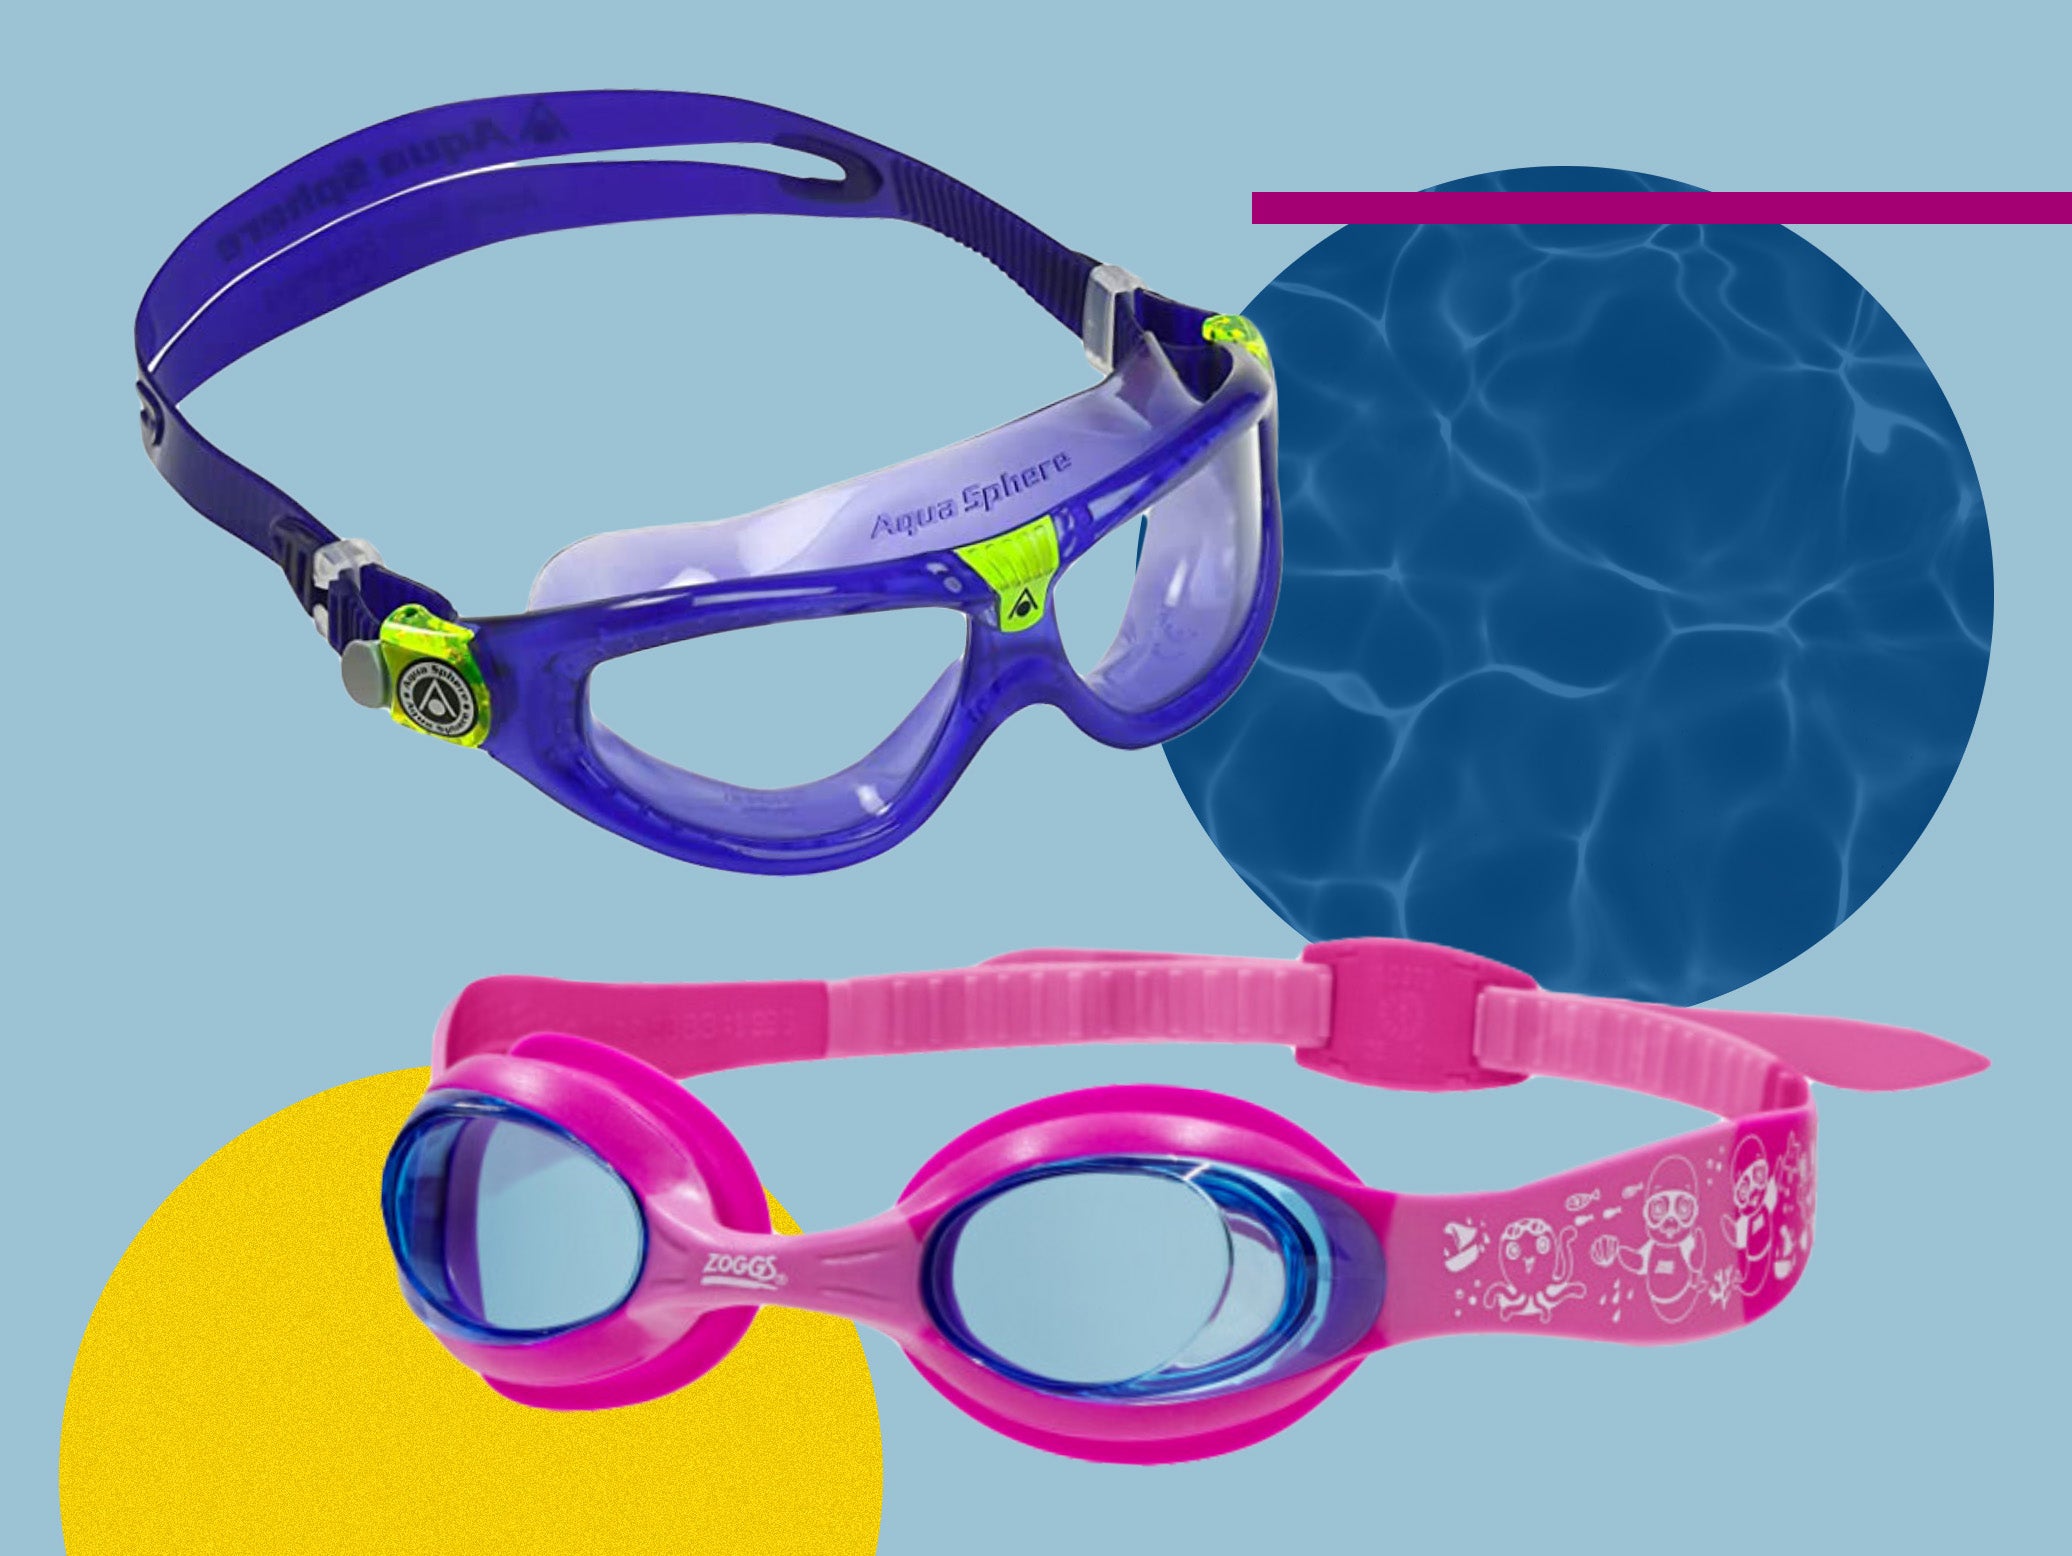 Aquari super anti-fog goggles for swimming comfortable UV protection pool sea AM 